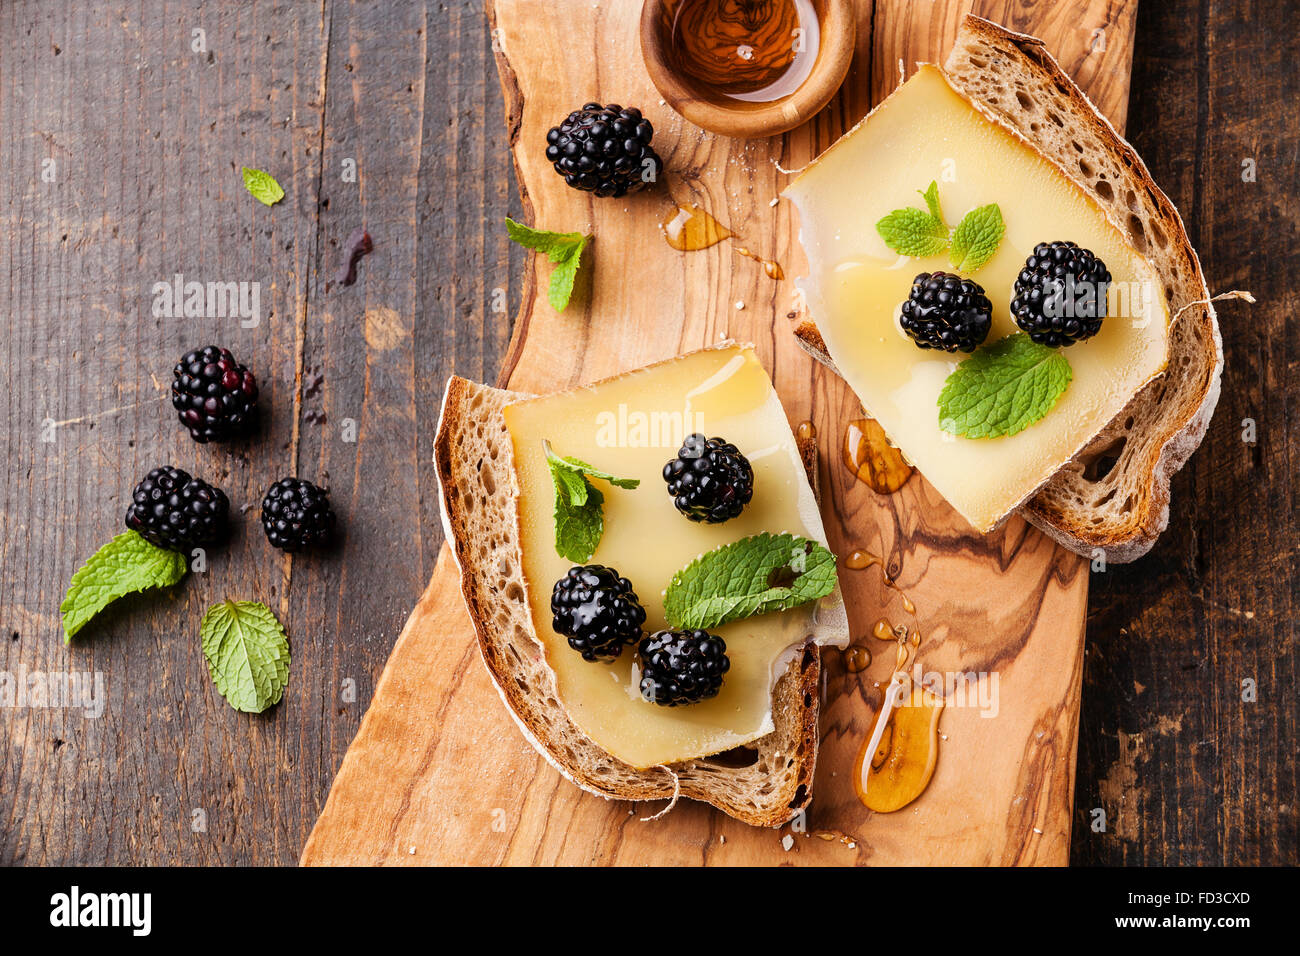 Sándwich con queso y blackberry en pan fresco sobre fondo de madera oscura. Foto de stock